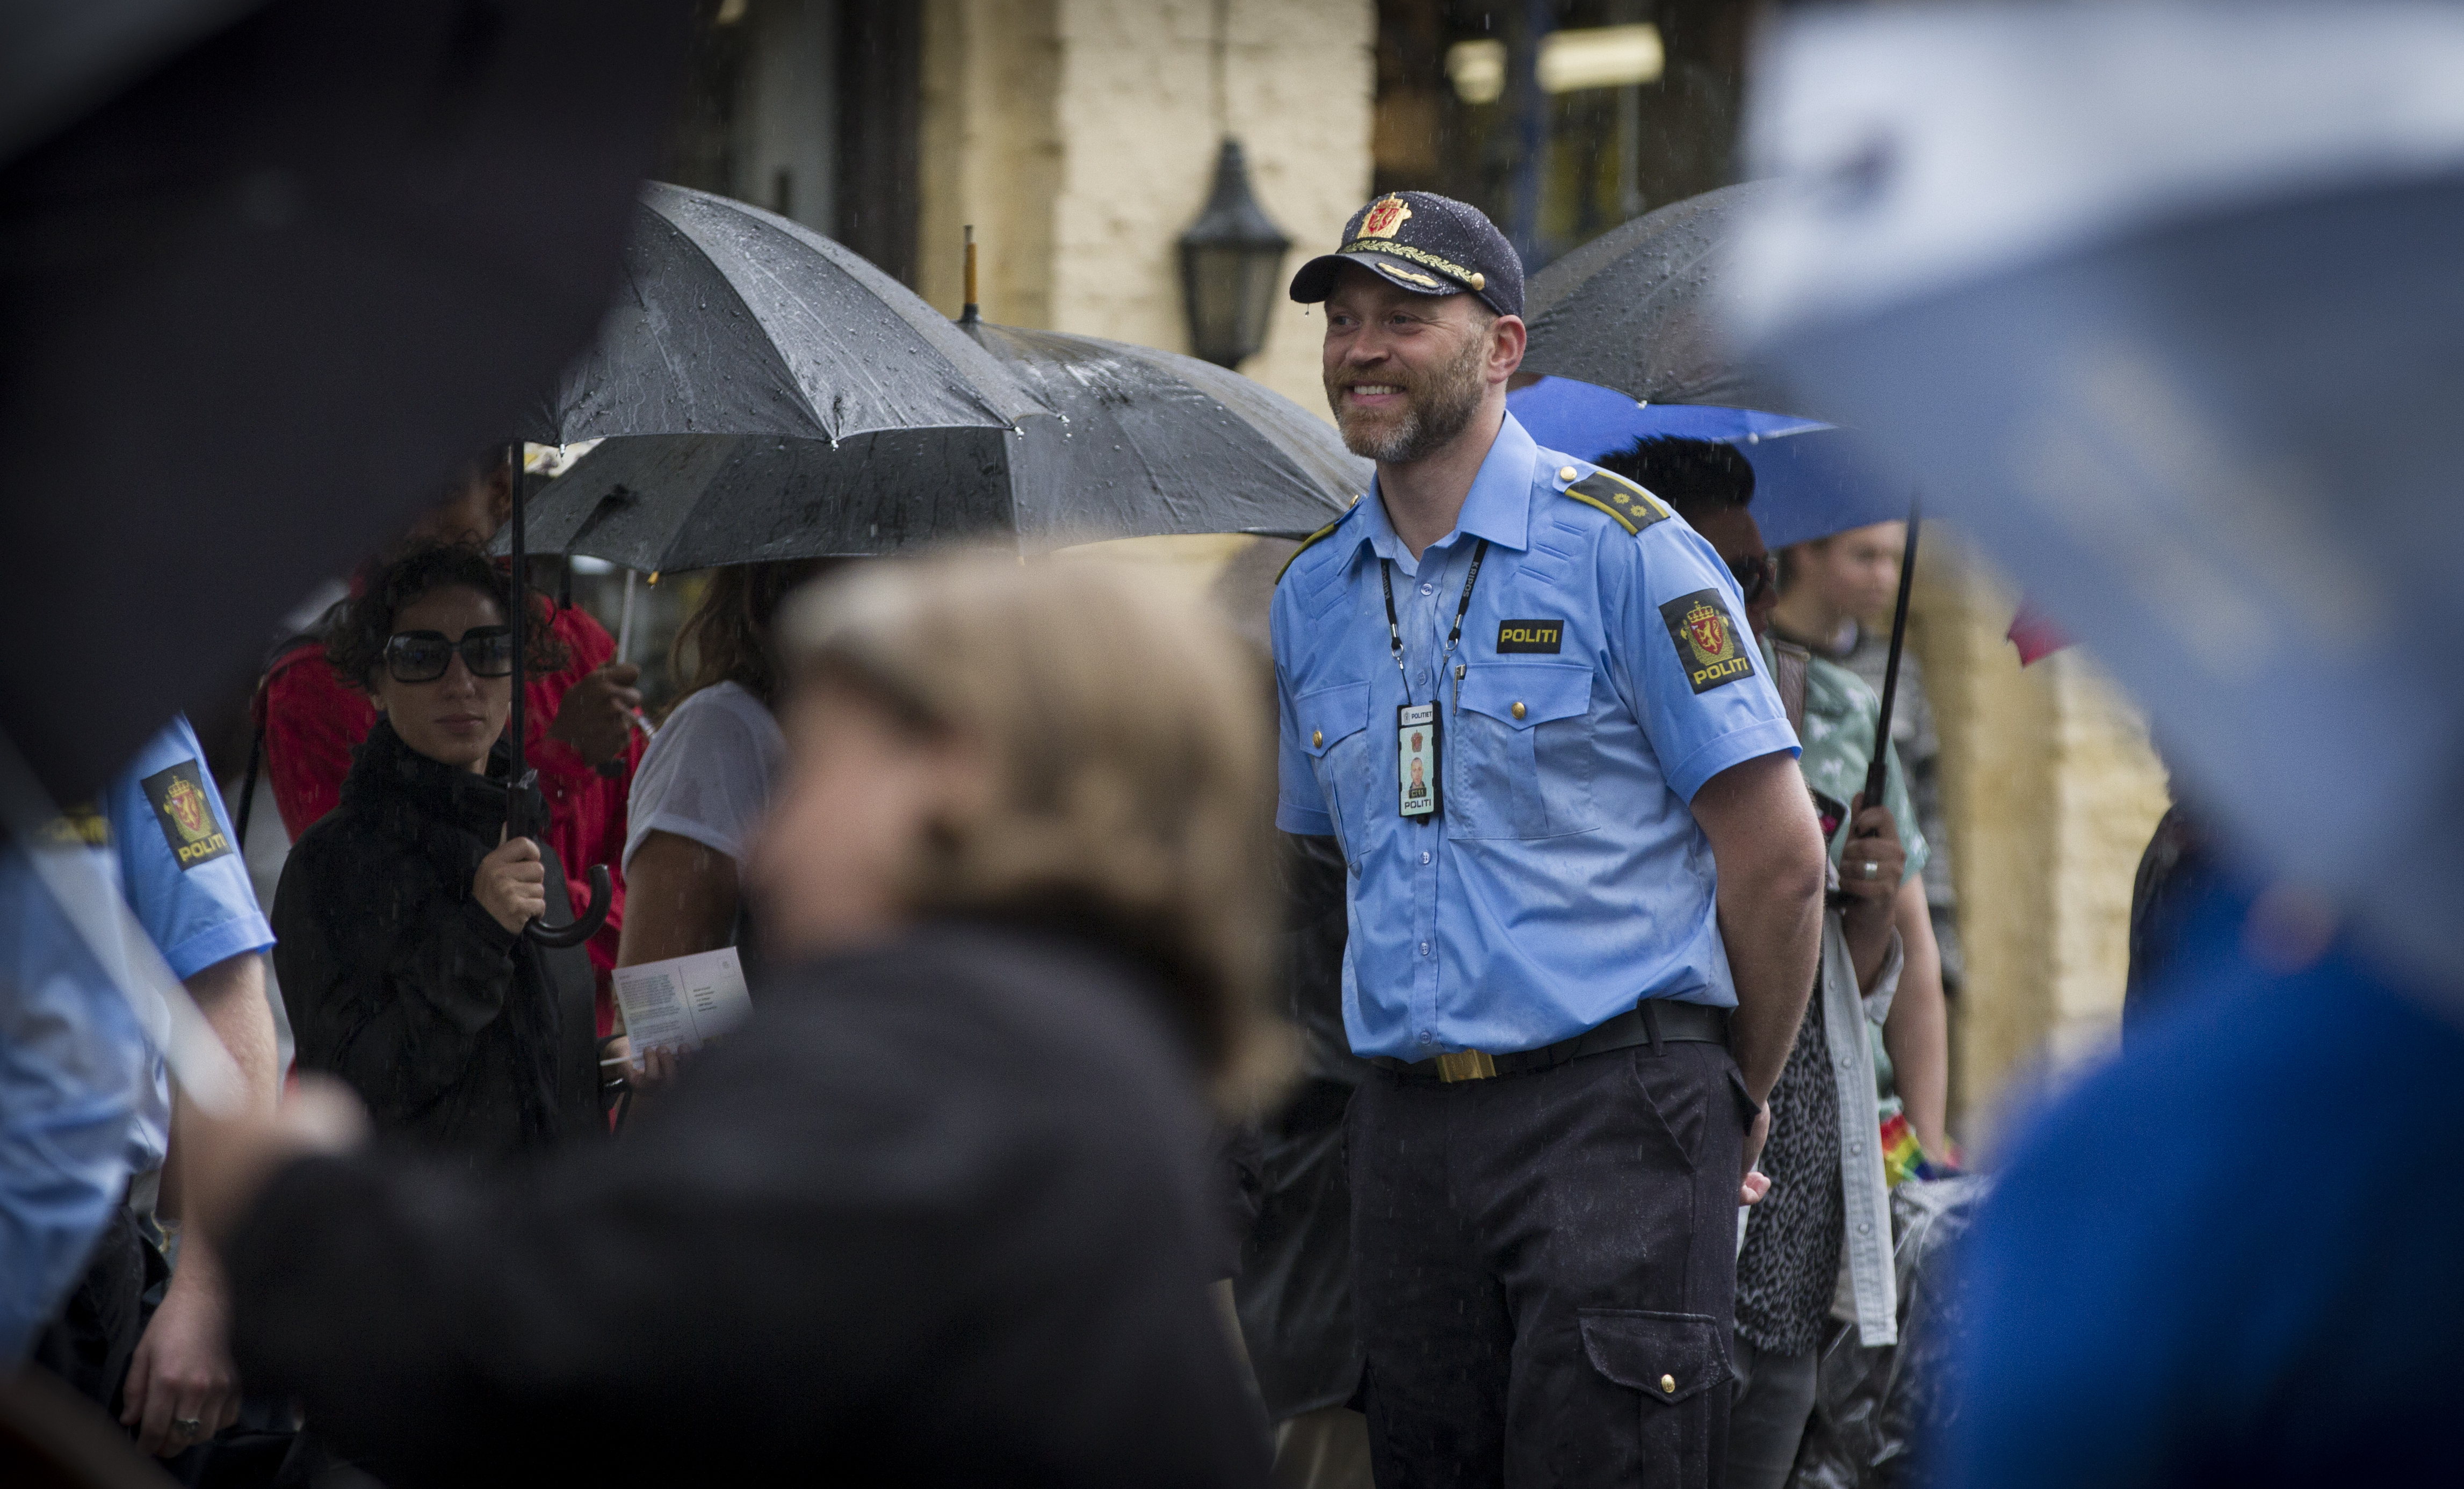 Parade 4 Politiet i homoparaden i Oslo, mangfold, homofili Foto Erik Inderhaug